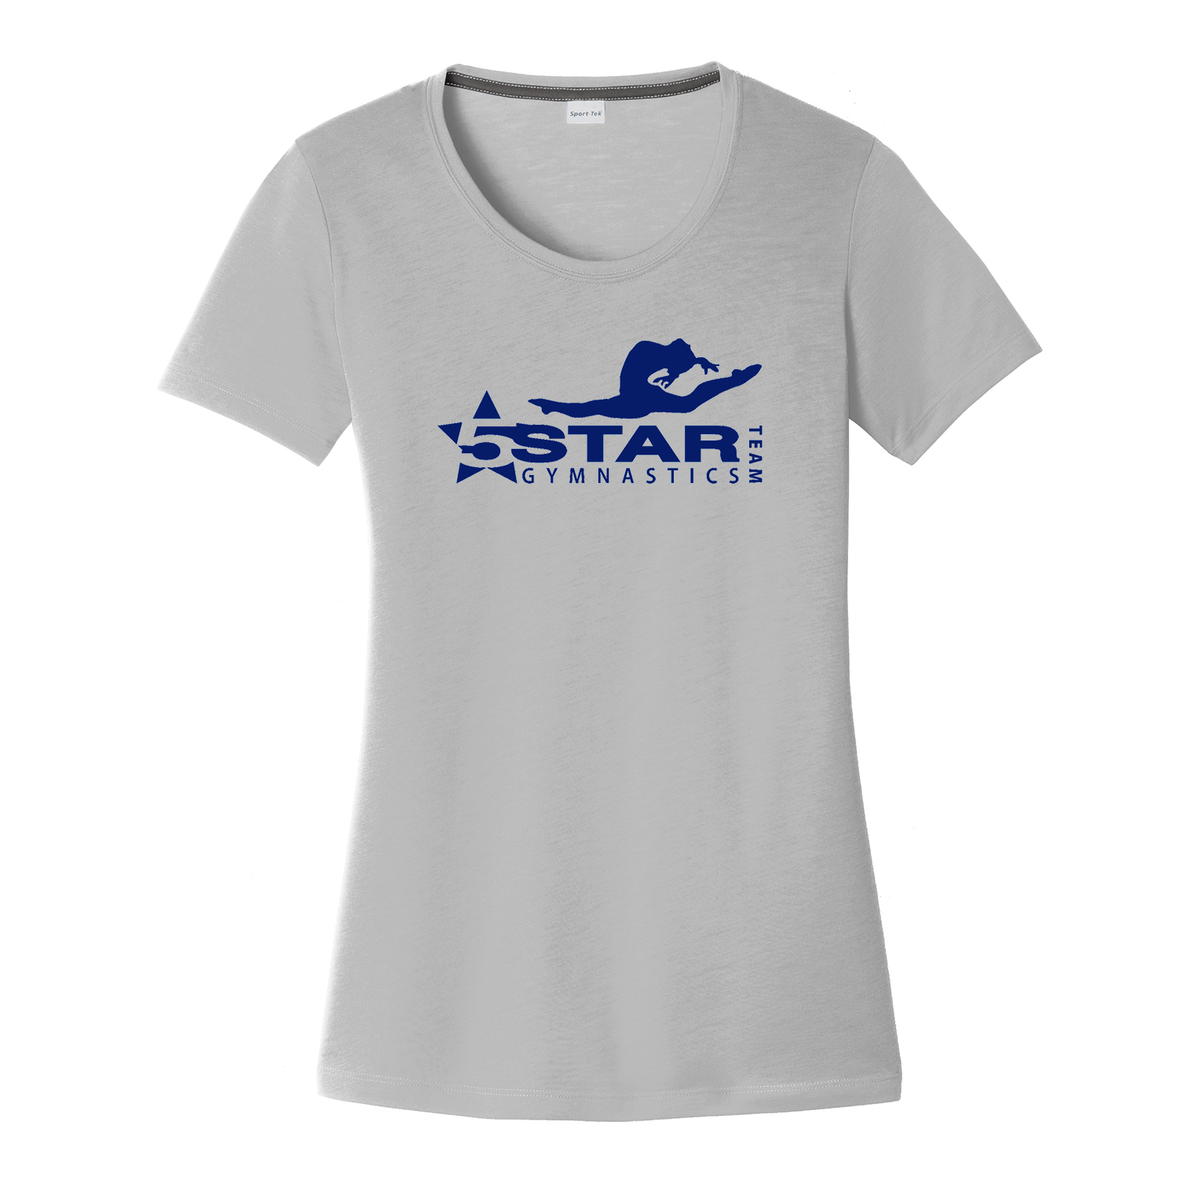 5 Star Gymnastics Women's CottonTouch Performance T-Shirt